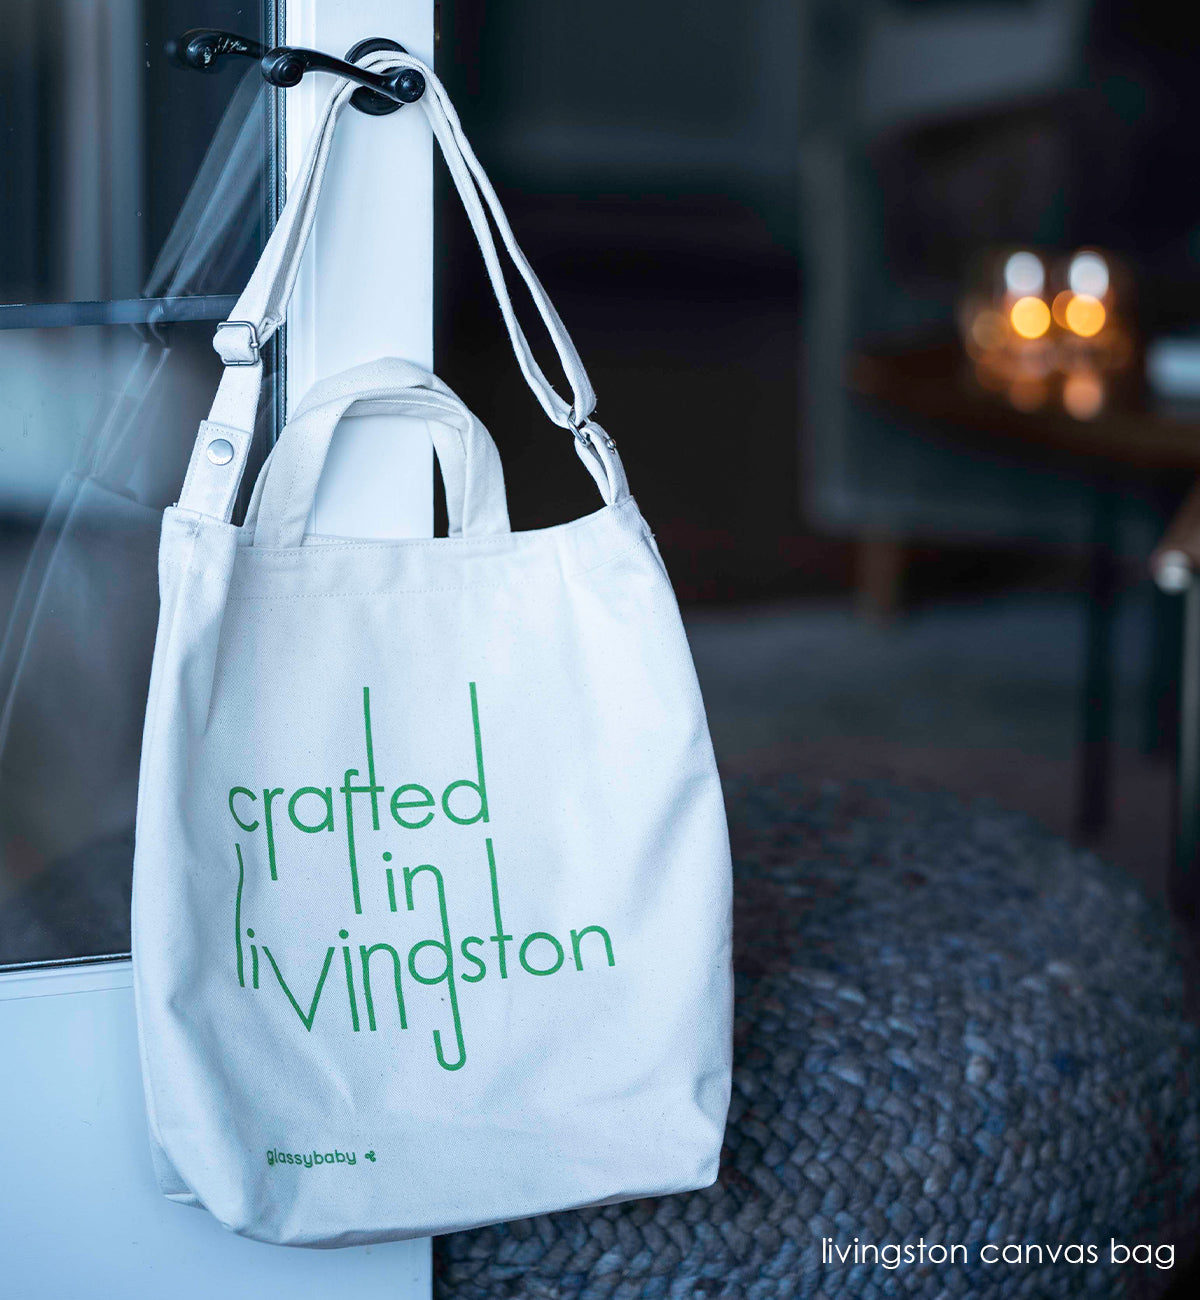 glassybaby livingston canvas bag